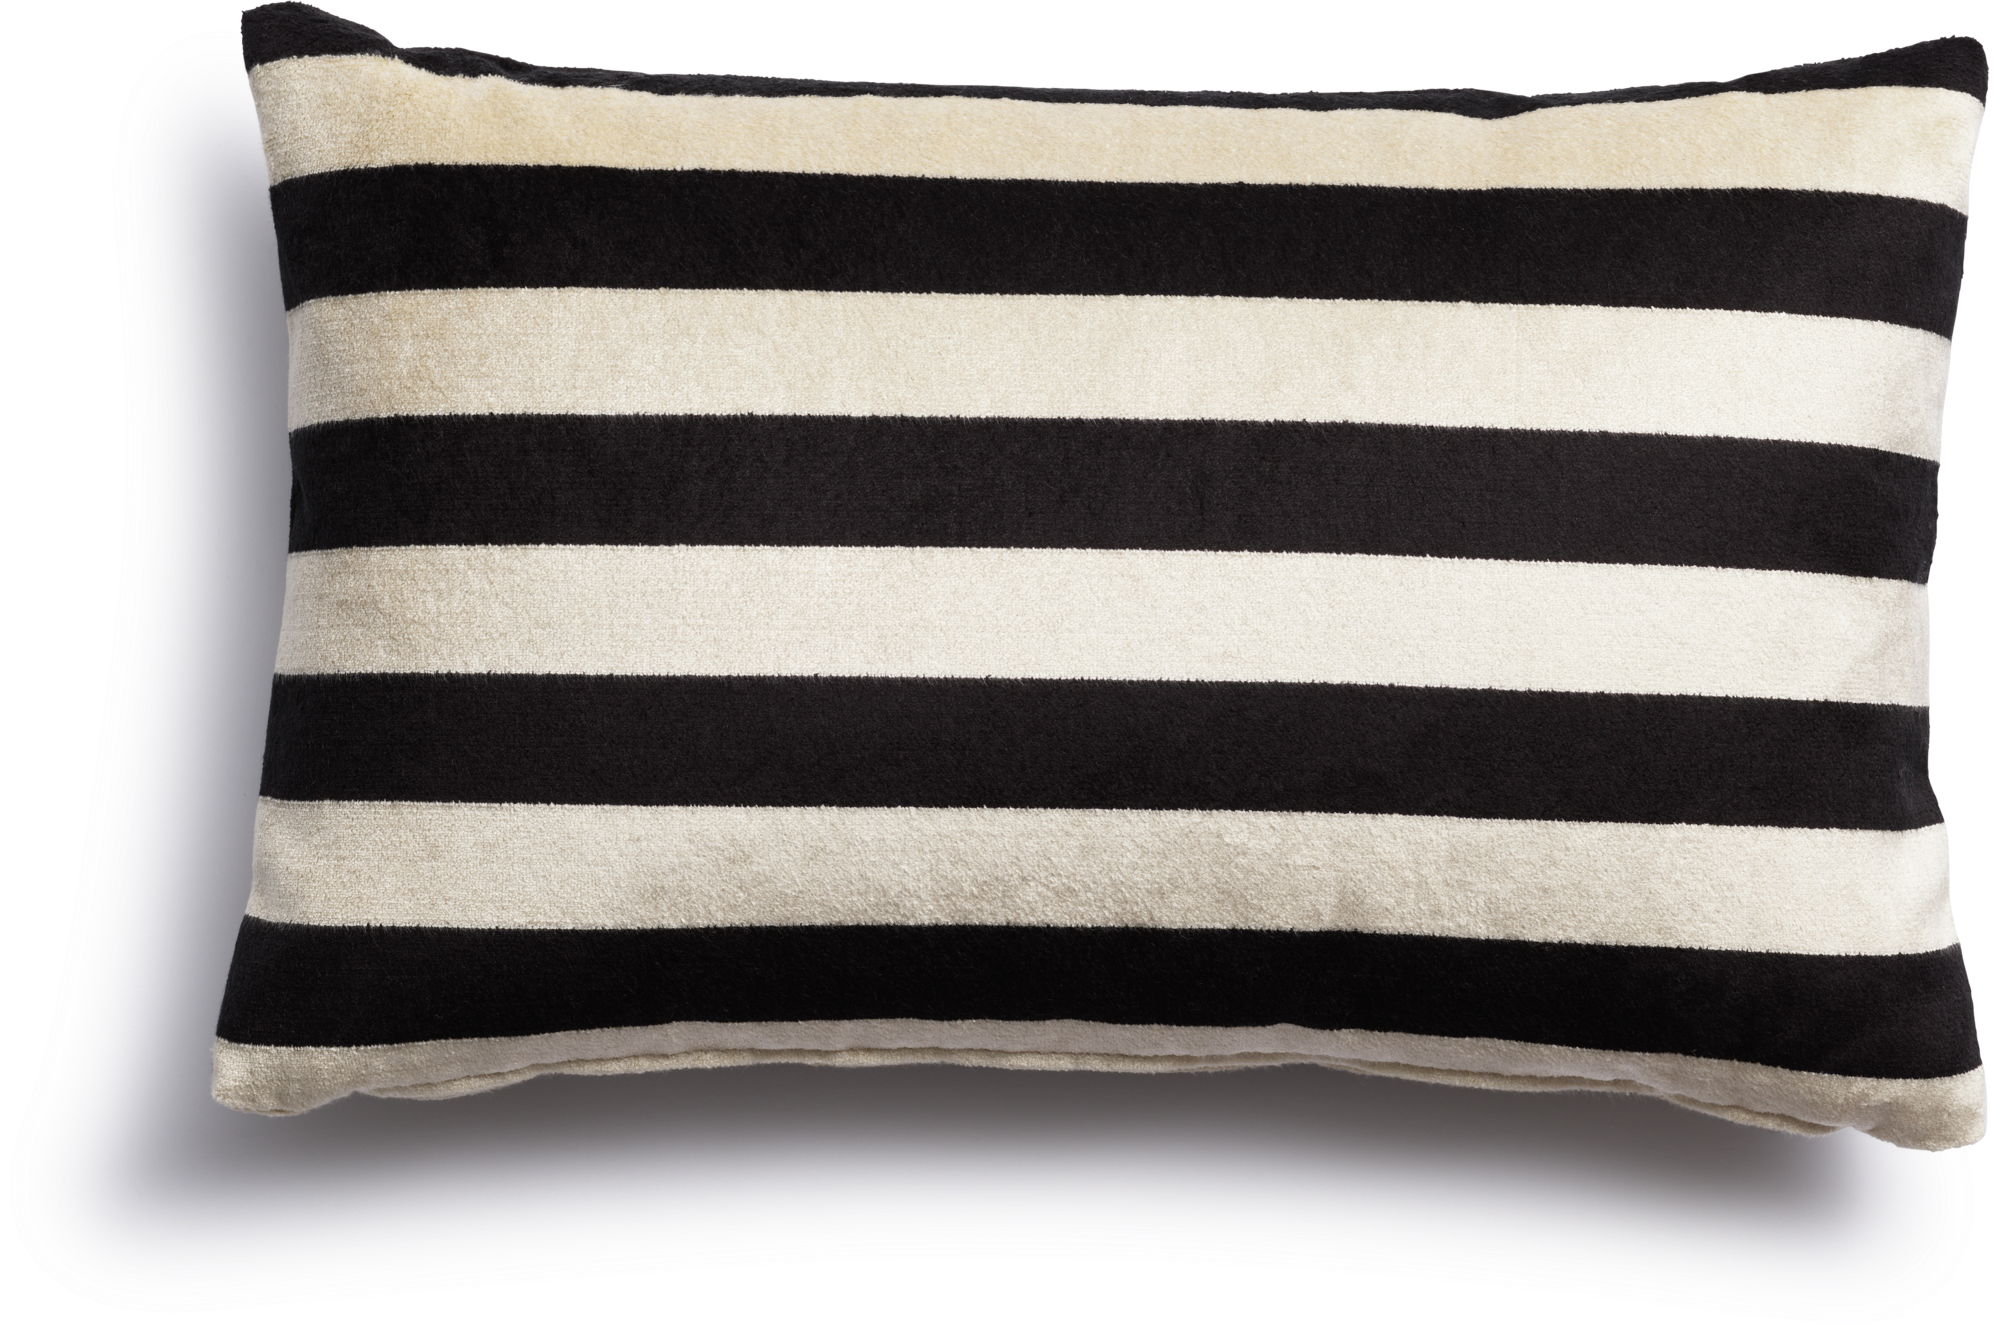 Soller decorative pillow